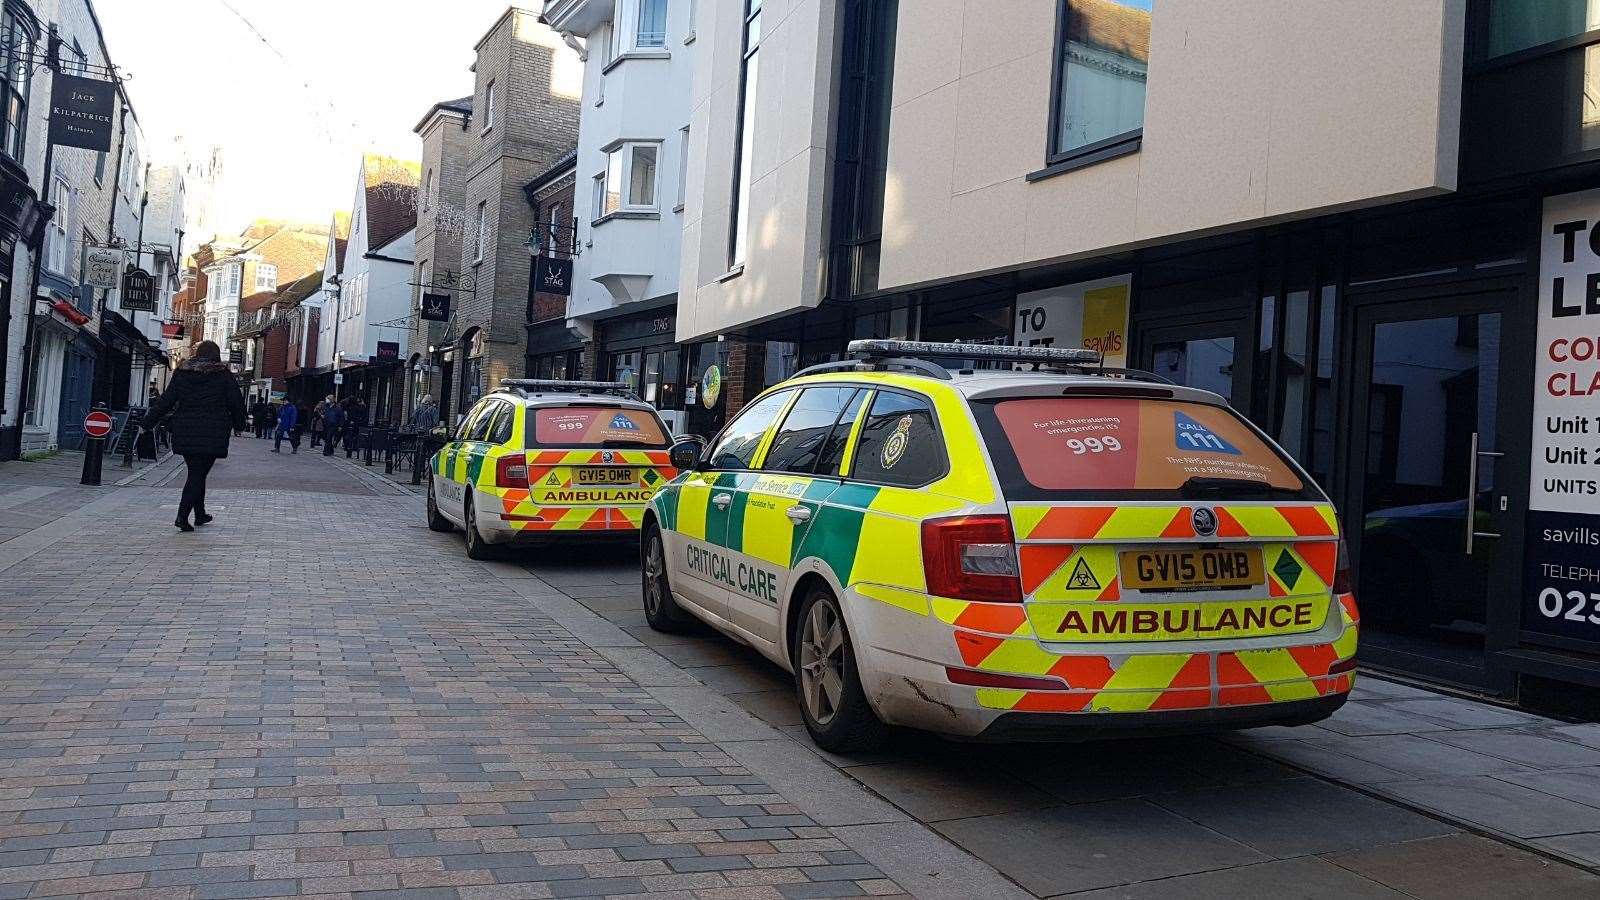 Ambulance vehicles in St Margaret's Street, Canterbury